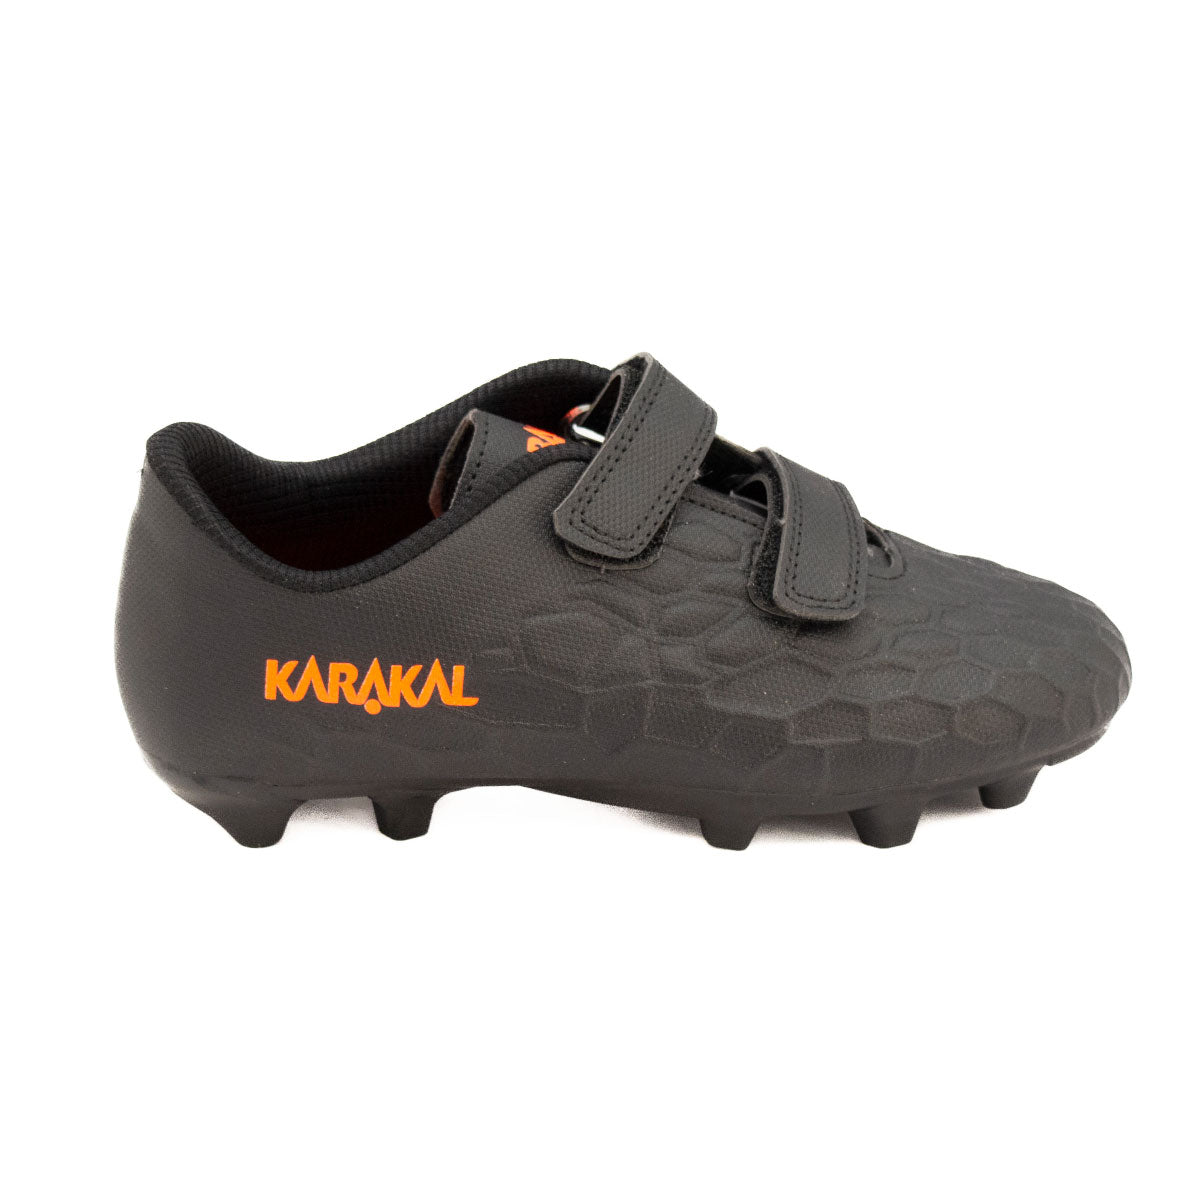 Karakal Hex FG Football Boots - Youth - Black/Orange